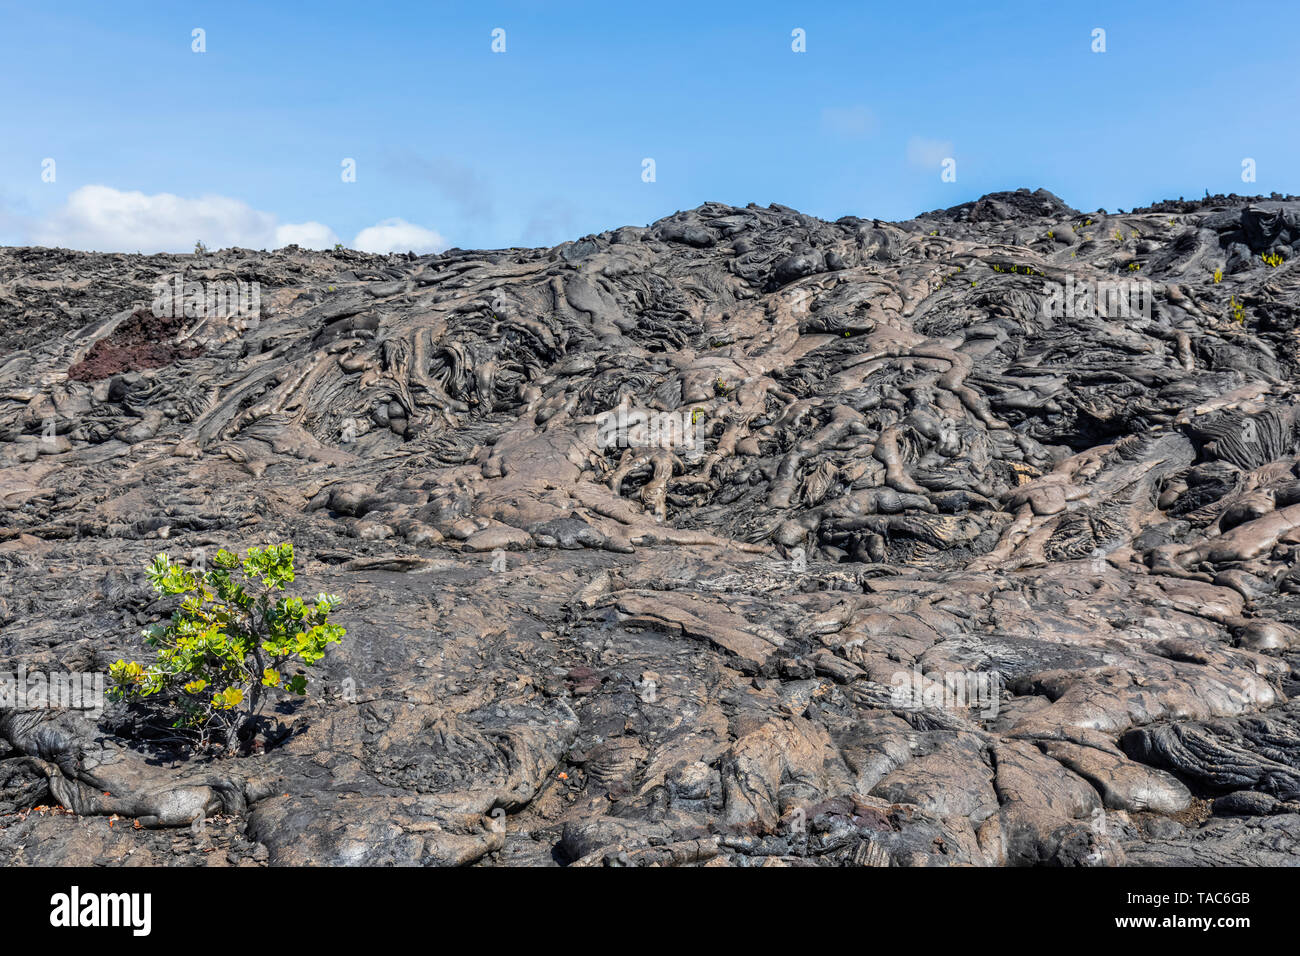 USA, Hawaii, Volcanoes National Park, plant growing on igneous rocks Stock Photo